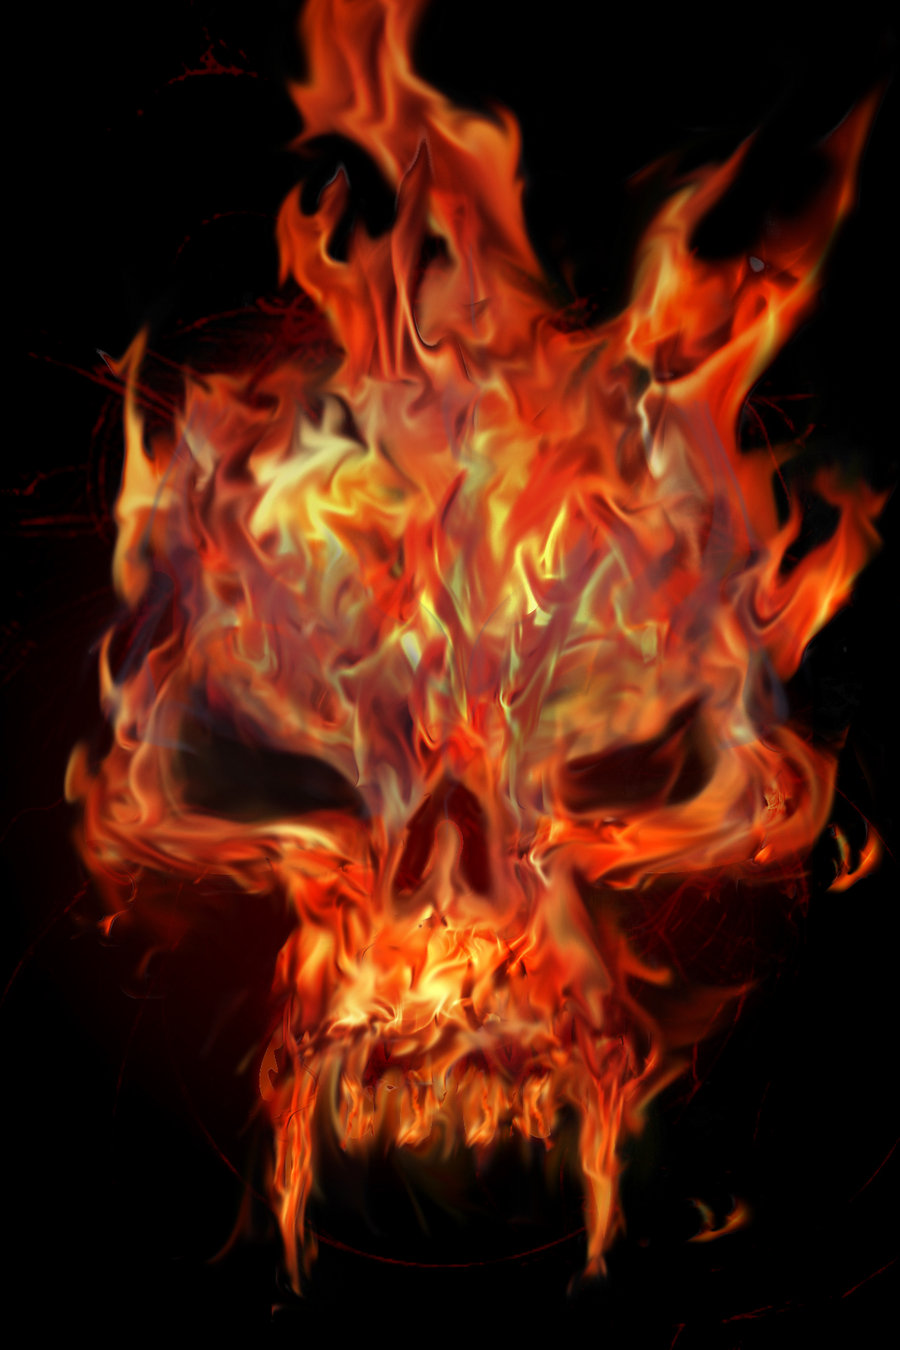 flaming skull wallpaper,flame,fire,heat,orange,bonfire